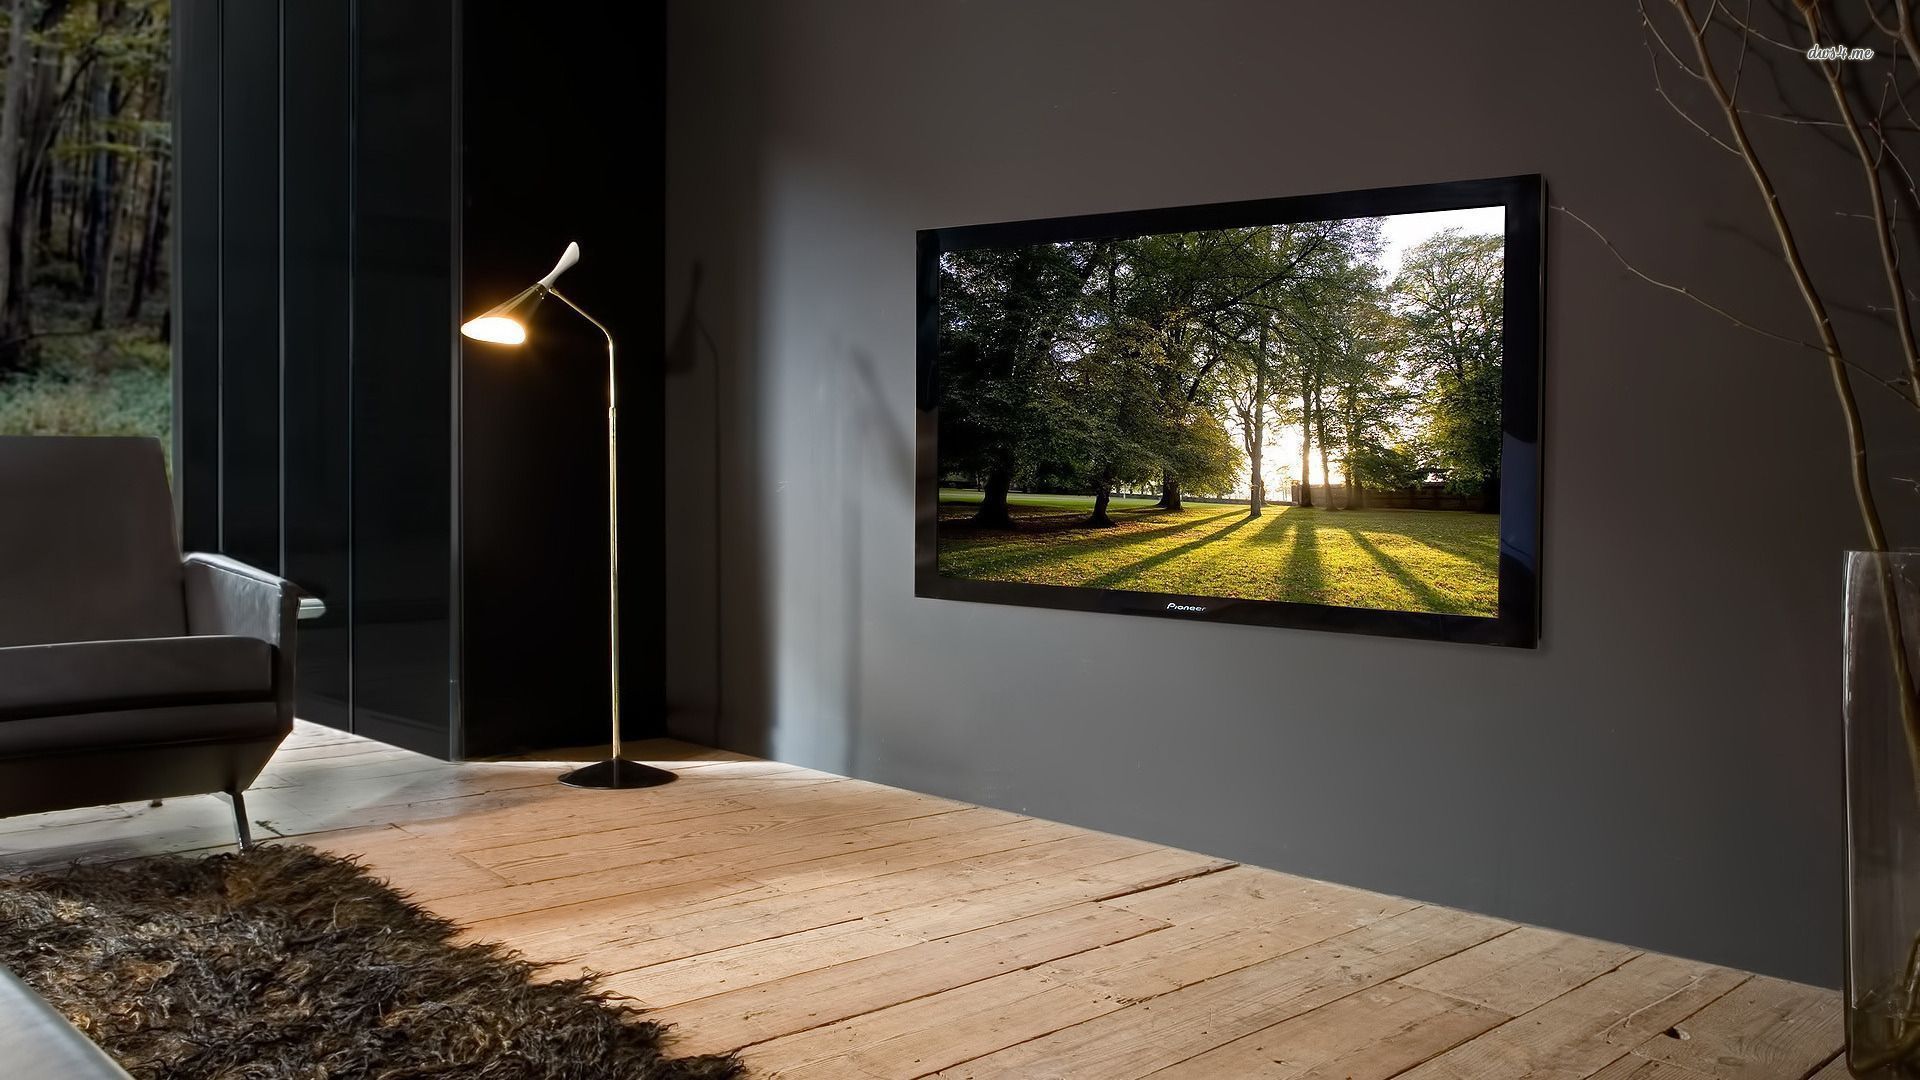 Pioneer HD TV in the living room wallpaper - Digital Art